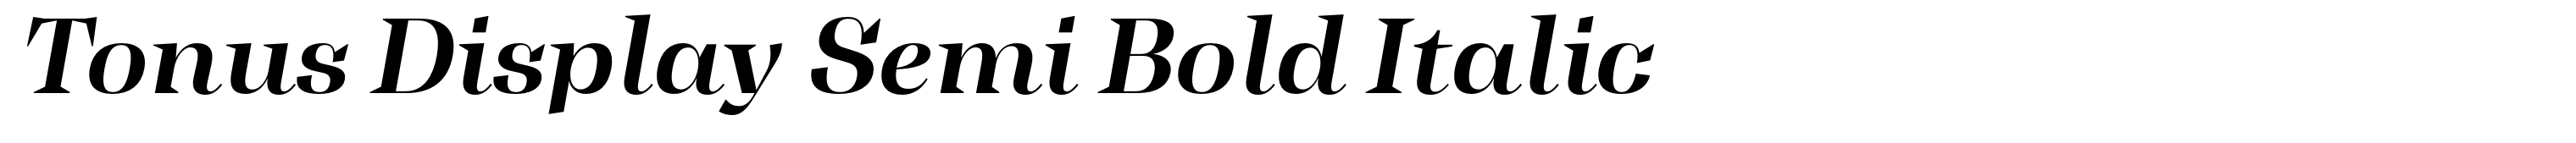 Tonus Display Semi Bold Italic